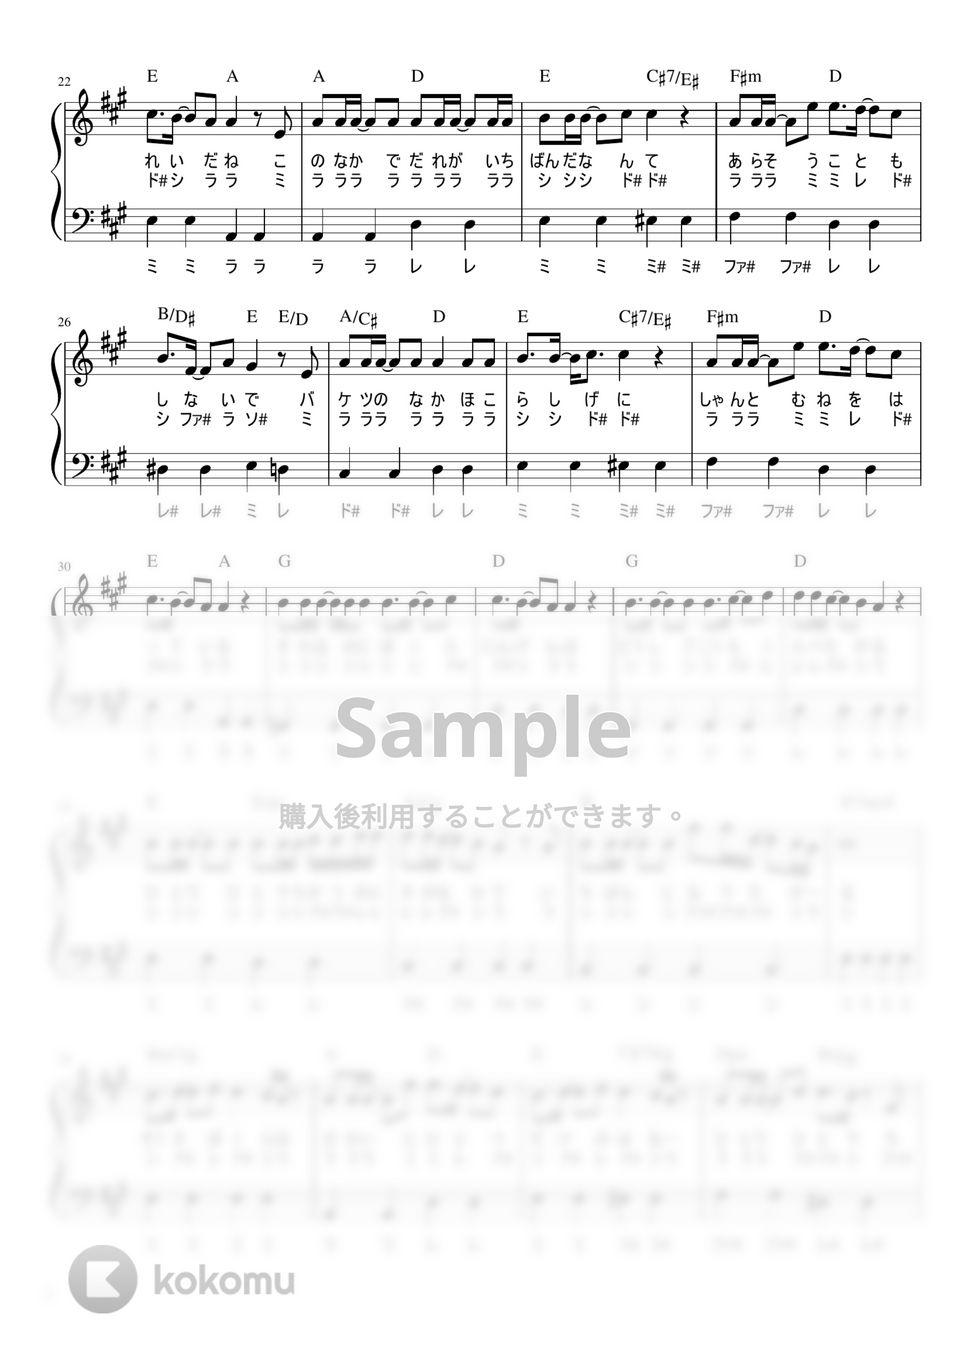 SMAP - 世界に一つだけの花 (かんたん / 歌詞付き / ドレミ付き / 初心者) by piano.tokyo